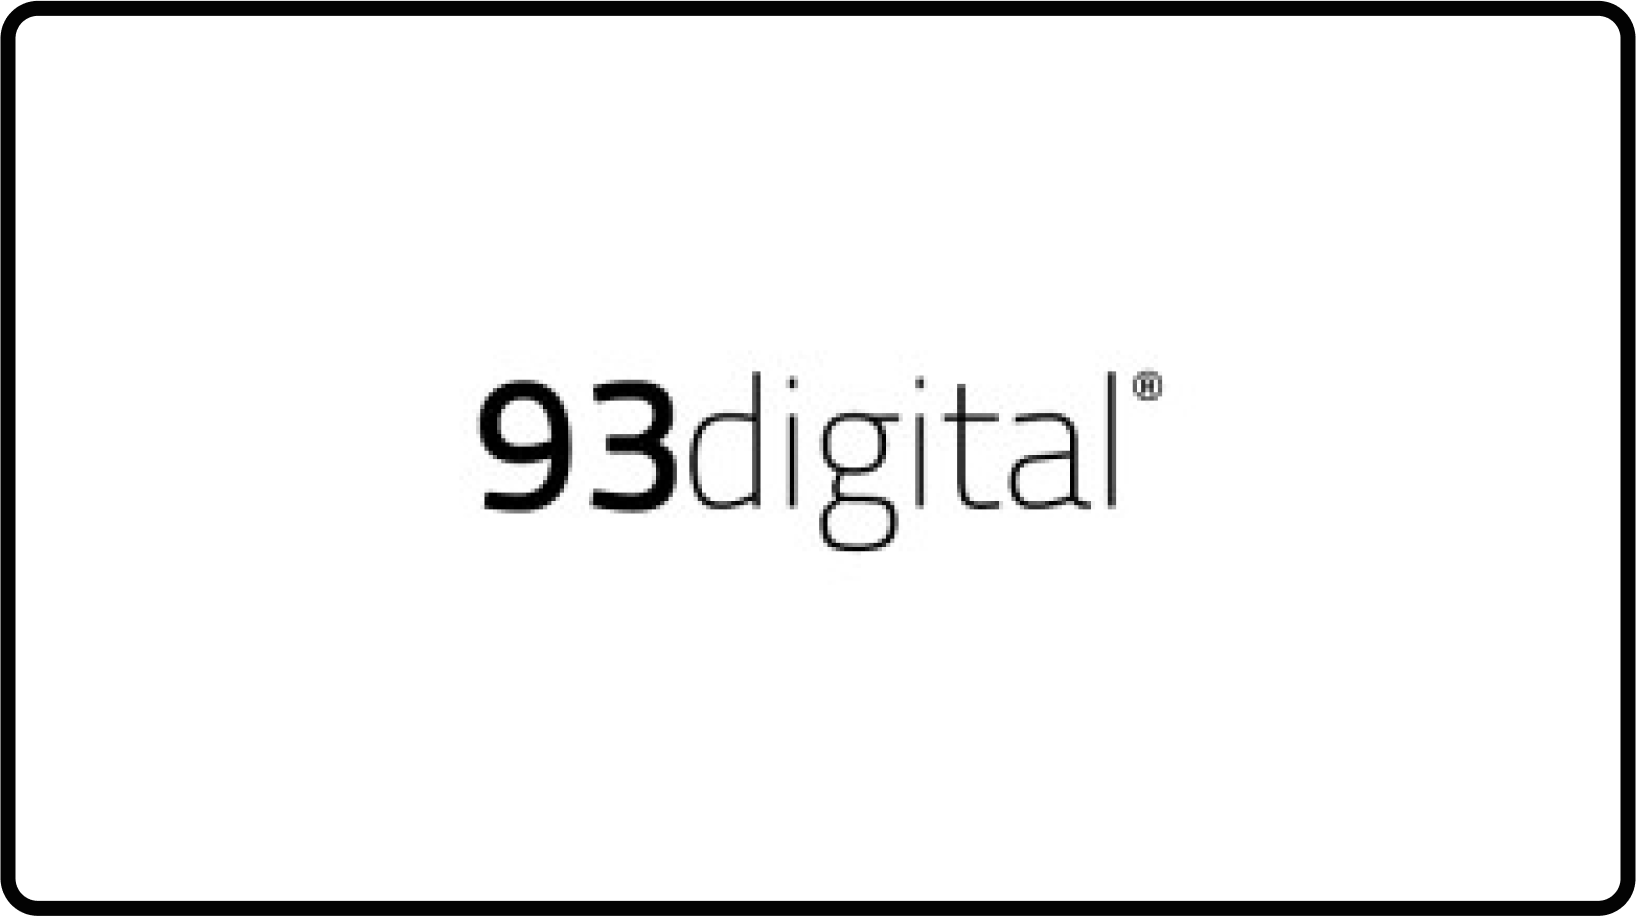 93digital: Digital marketing agency for startups UK